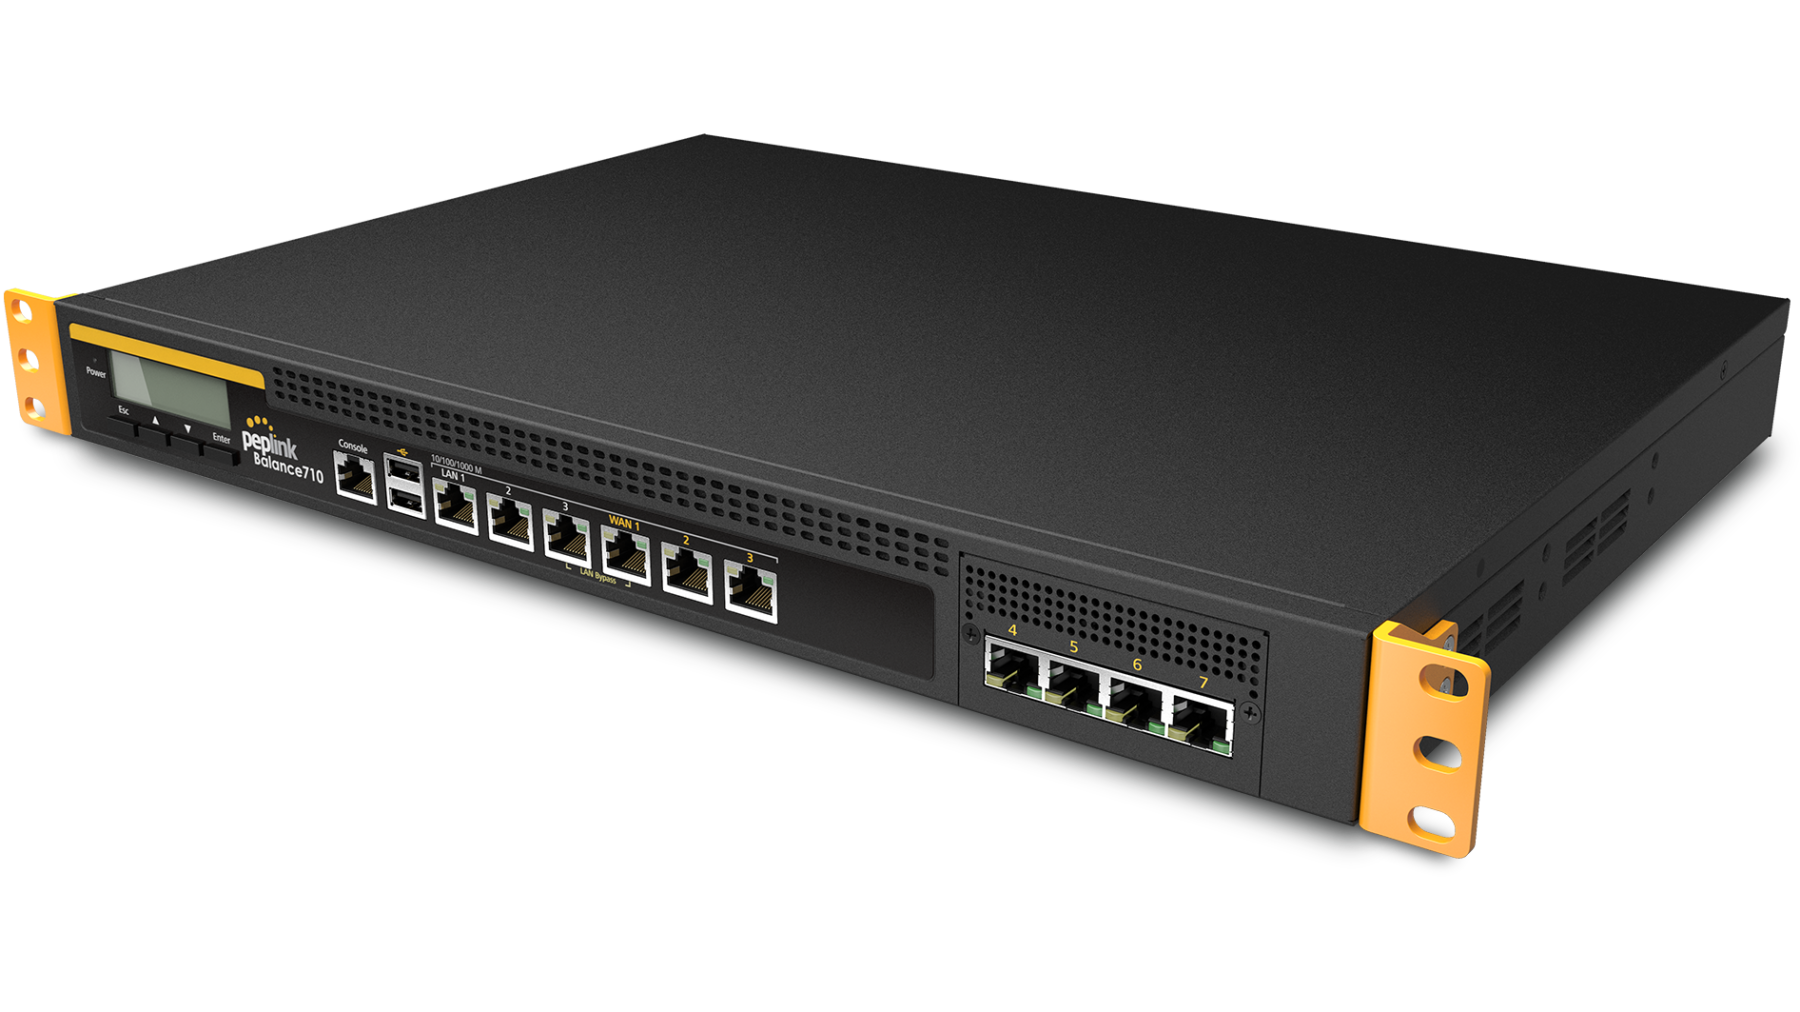  Routeurs 4G LTE Multiwan SdWan Firewall 2.5Gb Balance 710 : routeur firewall multiWan, 7 ports WAN,2.5 Gb, 500-2000 users